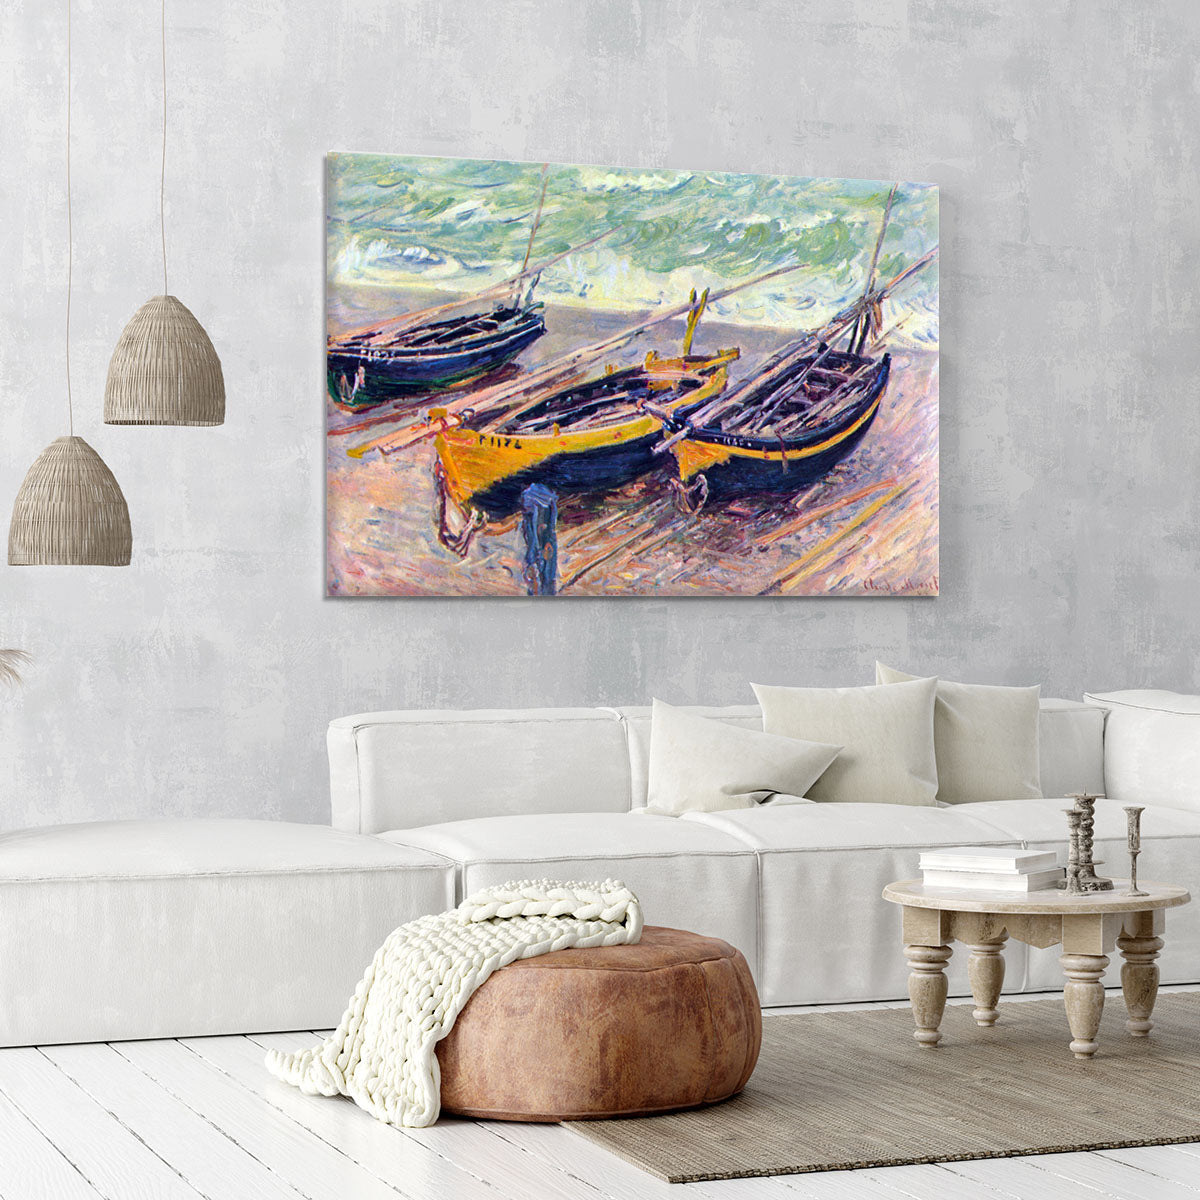 Dock of etretat three fishing boats by Monet Canvas Print or Poster - Canvas Art Rocks - 6